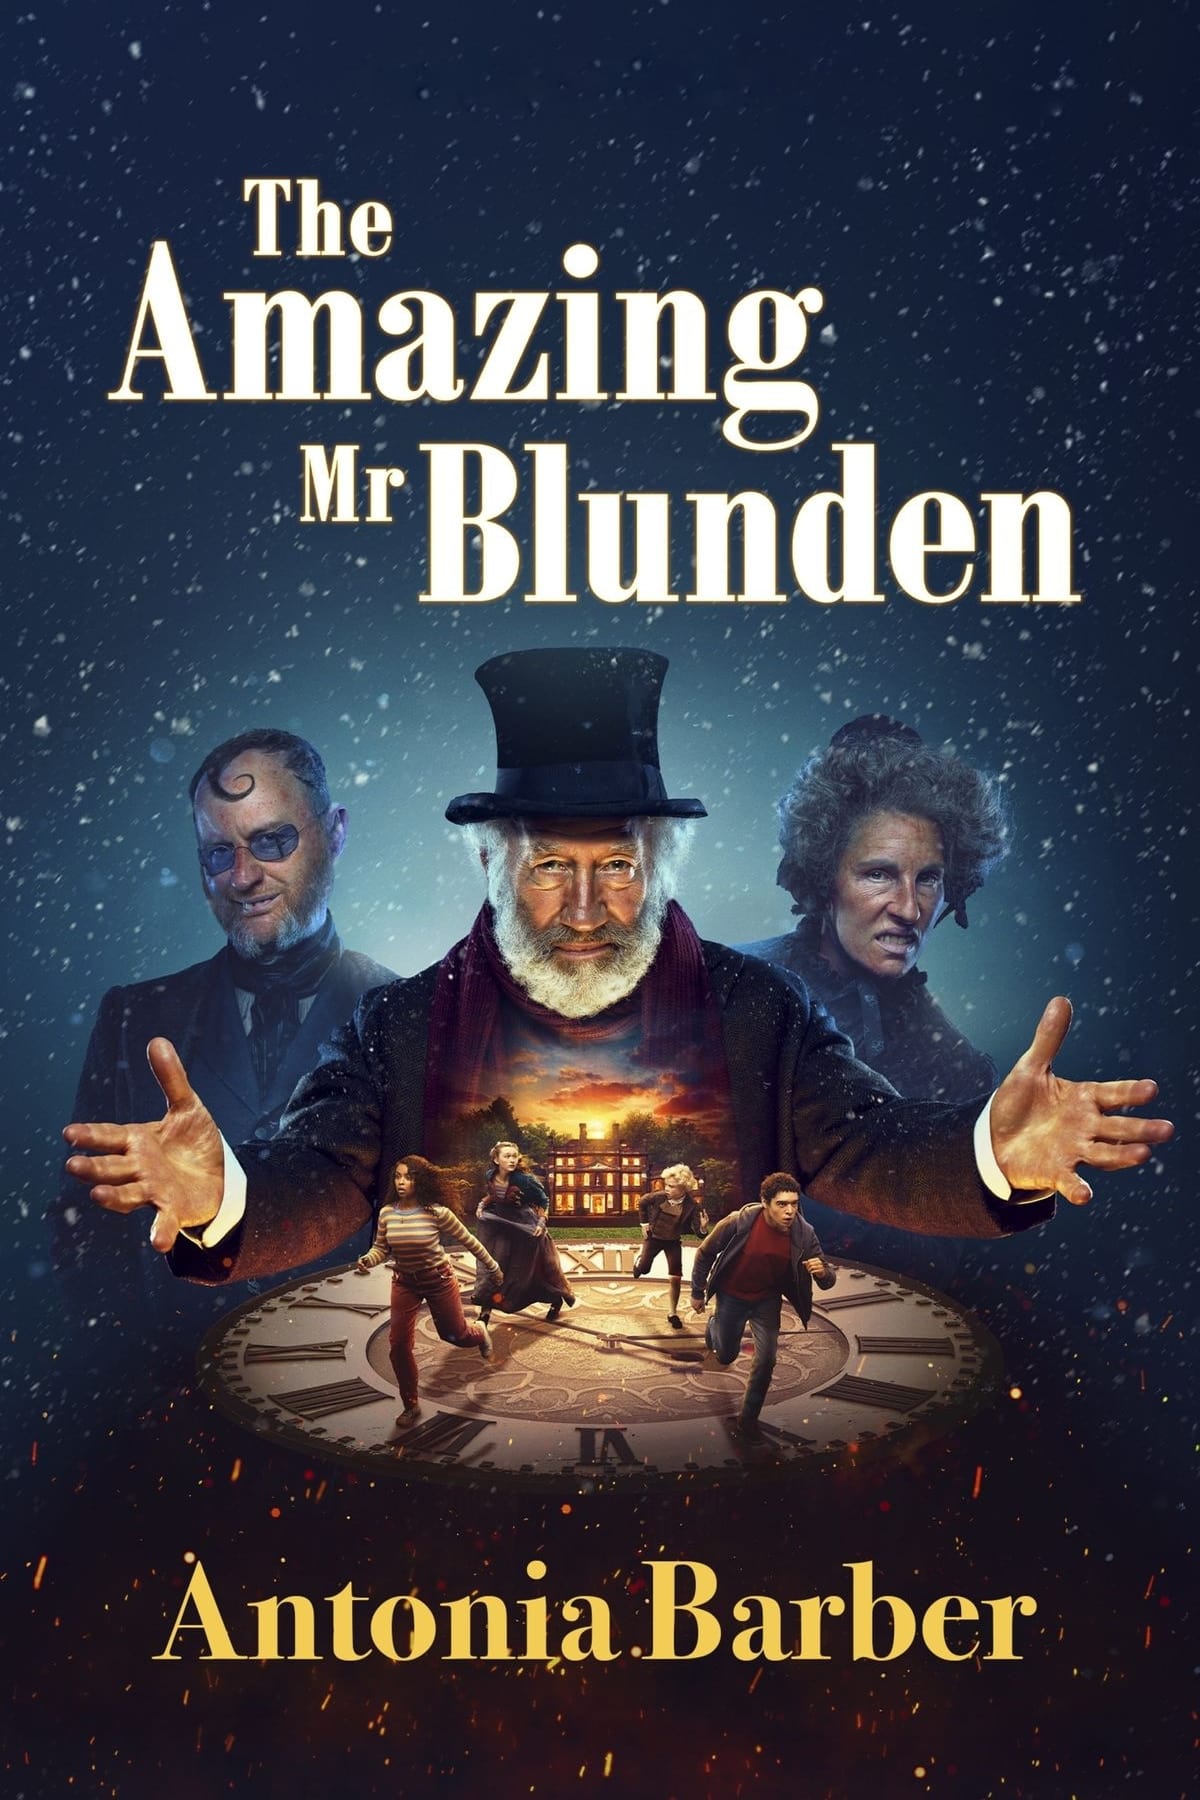 The Amazing Mr. Blunden (2021)